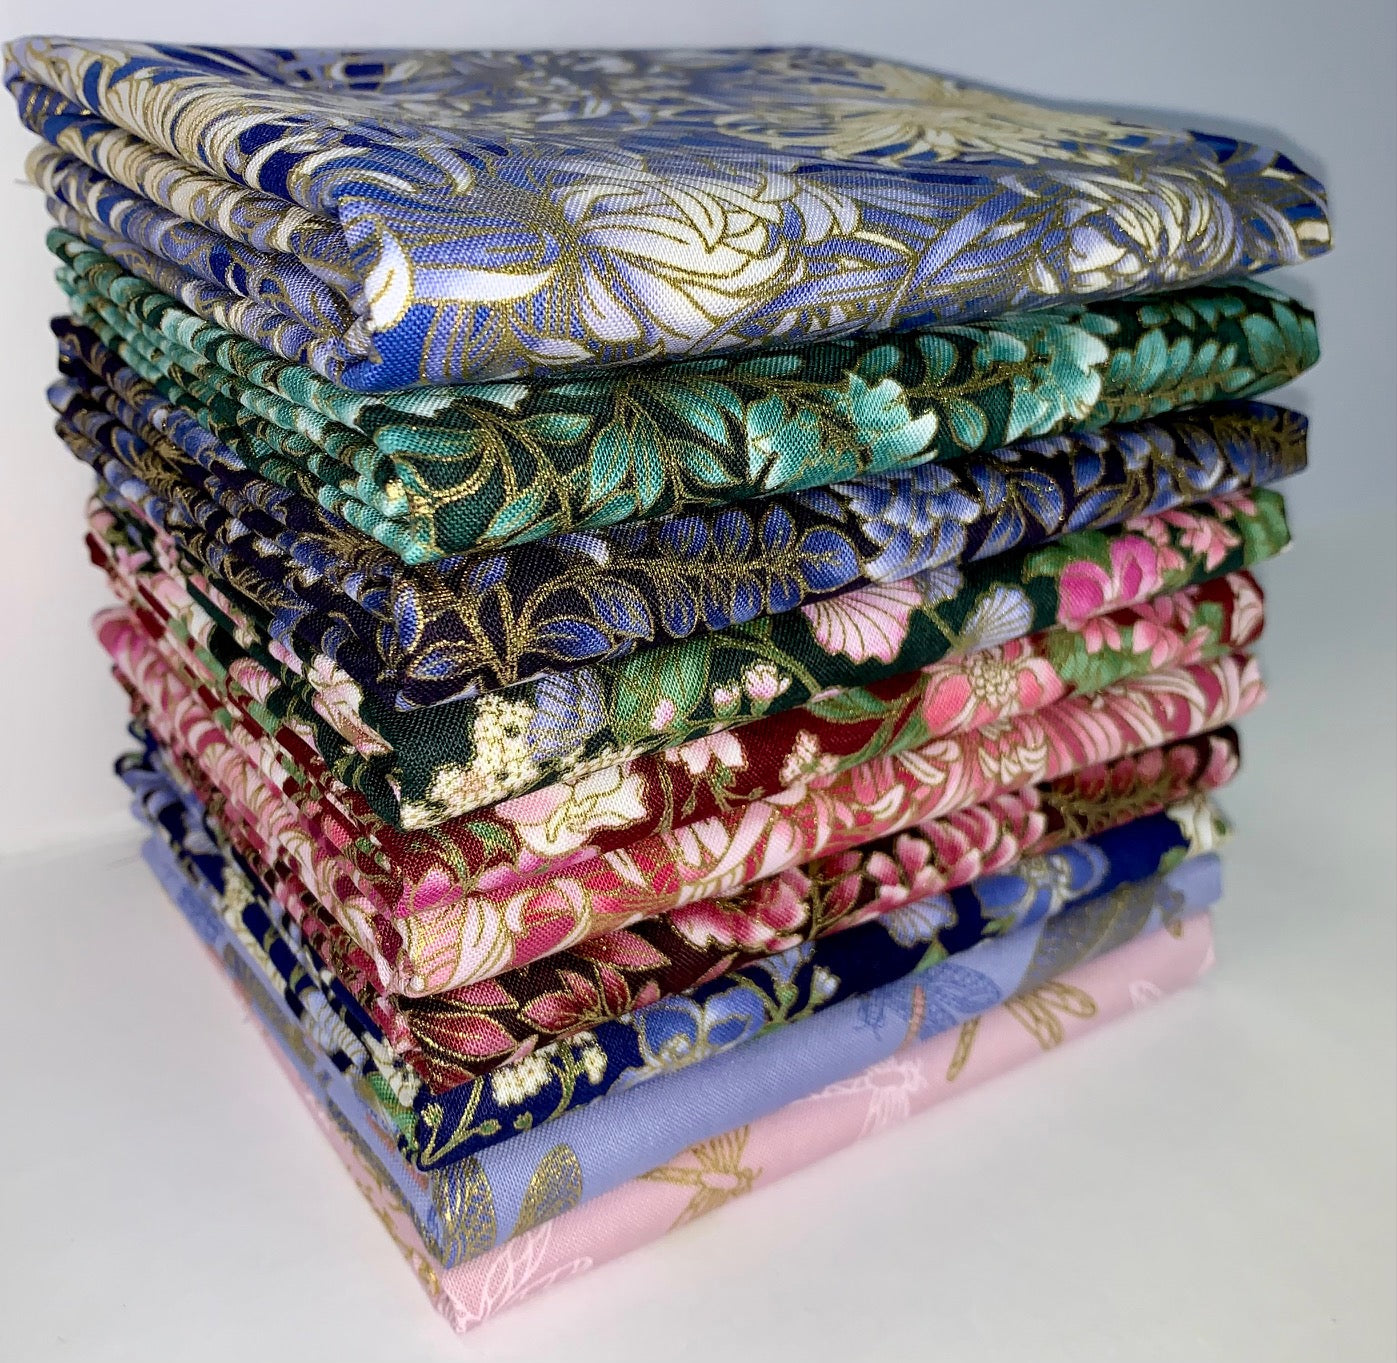 Robert Kaufman "Aurelia" Half-Yard Bundle - 10 Fabrics, 5 Total Yards